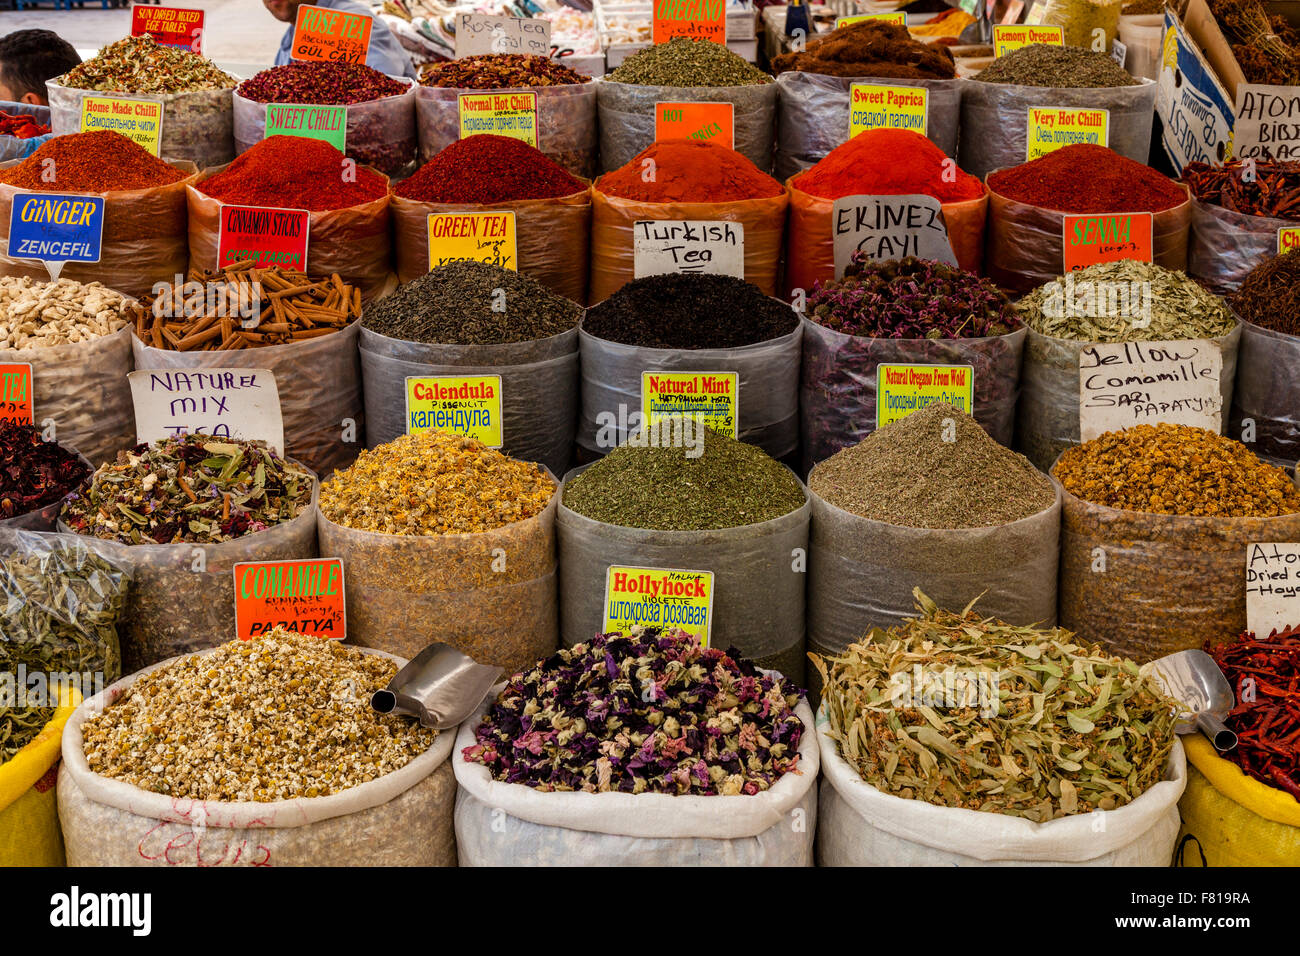 Spice Stall At The Monday Market In Turunc near Marmaris, Mugla Province, Turkey Stock Photo